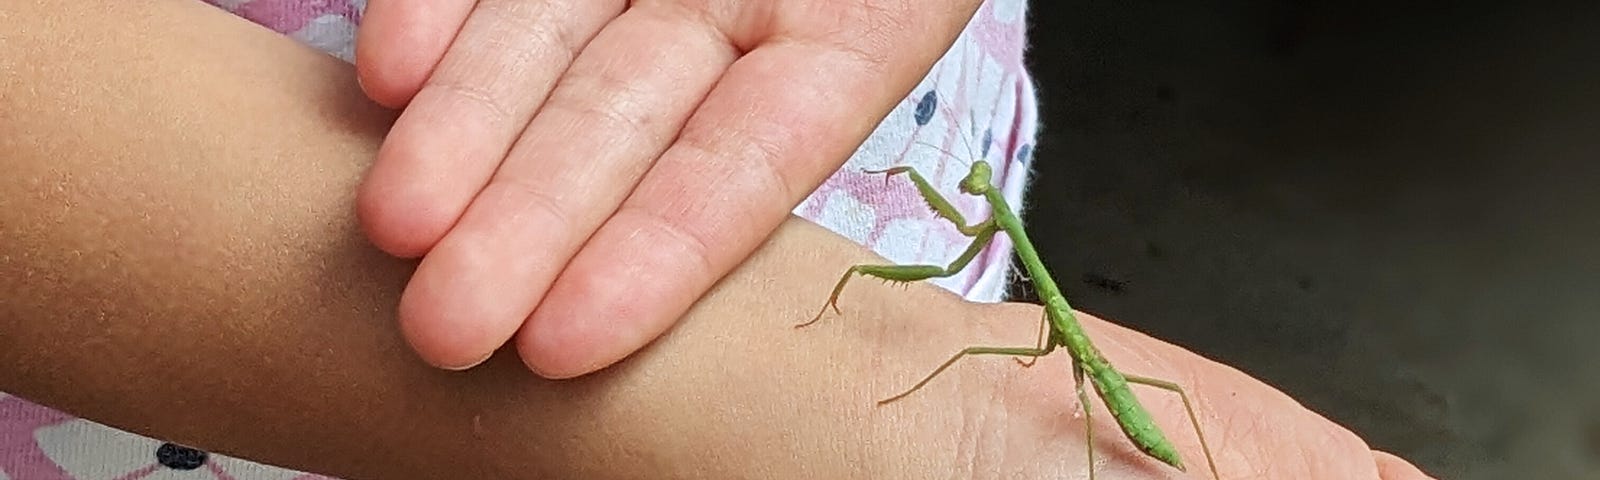 A green praying mantis crawling up on a child’s arm.